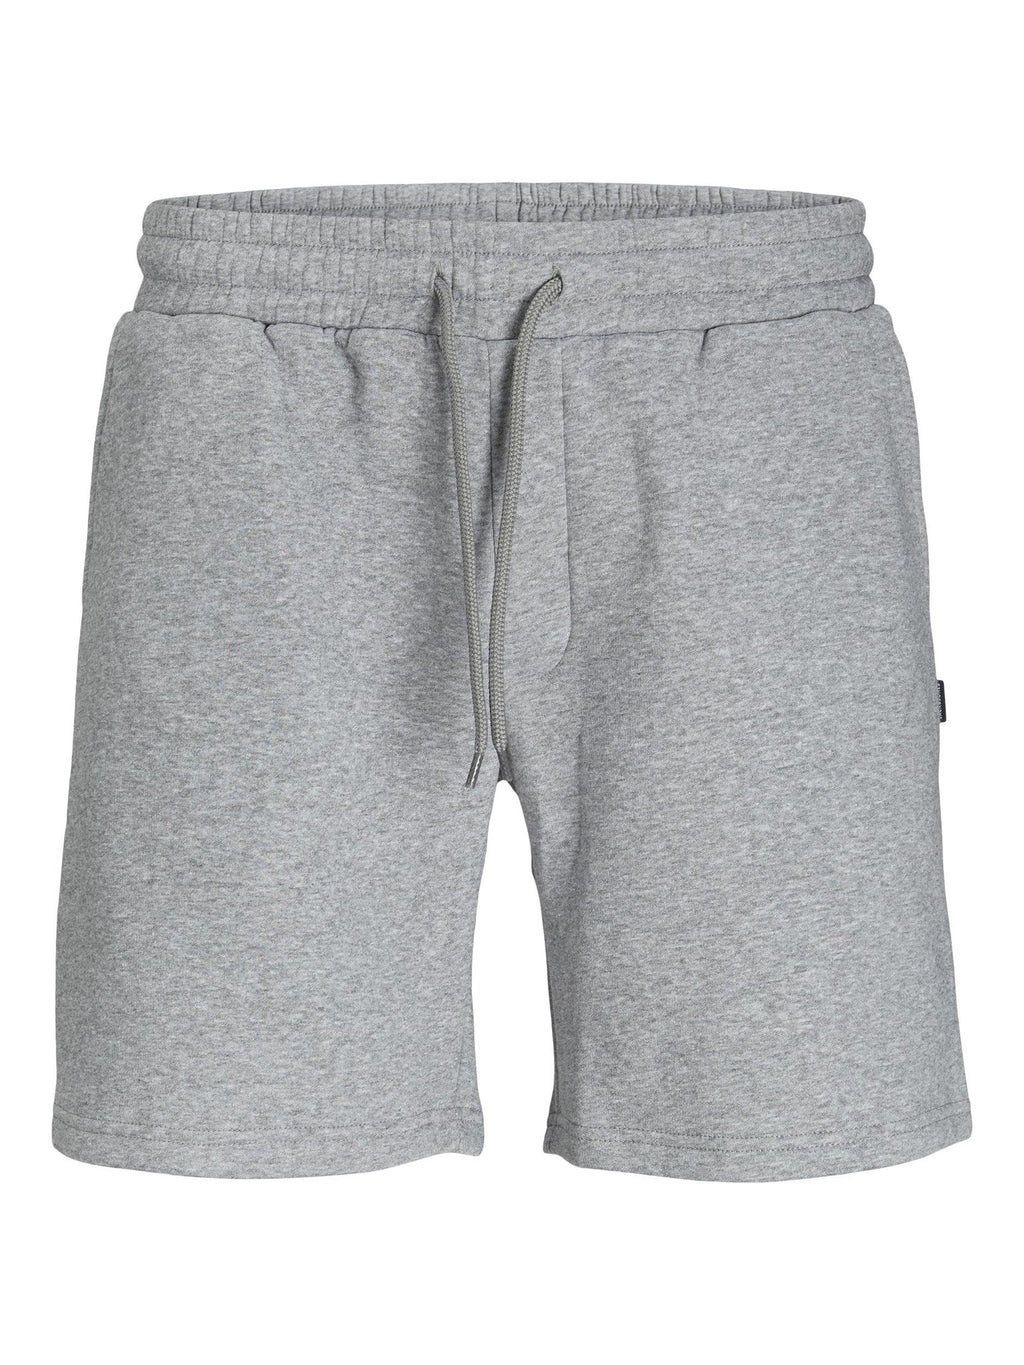 Star Sweat Shorts - Light Gray Melange